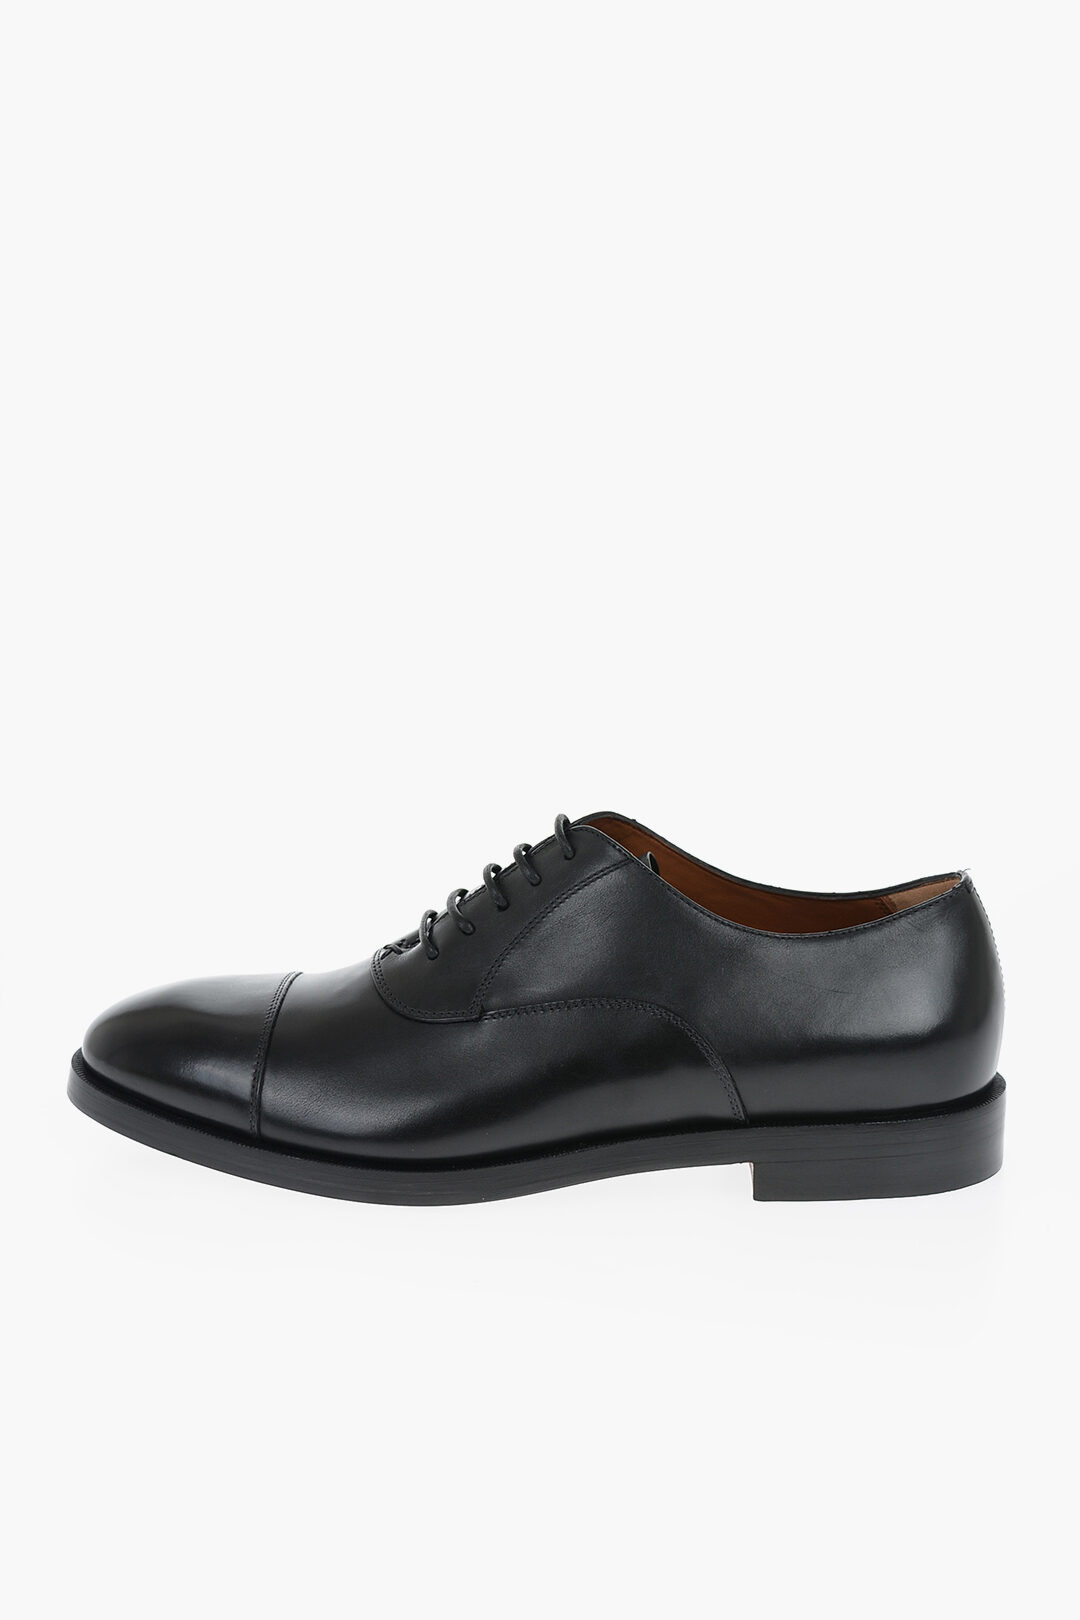 Zegna Torino Leather Oxford Shoes - Farfetch